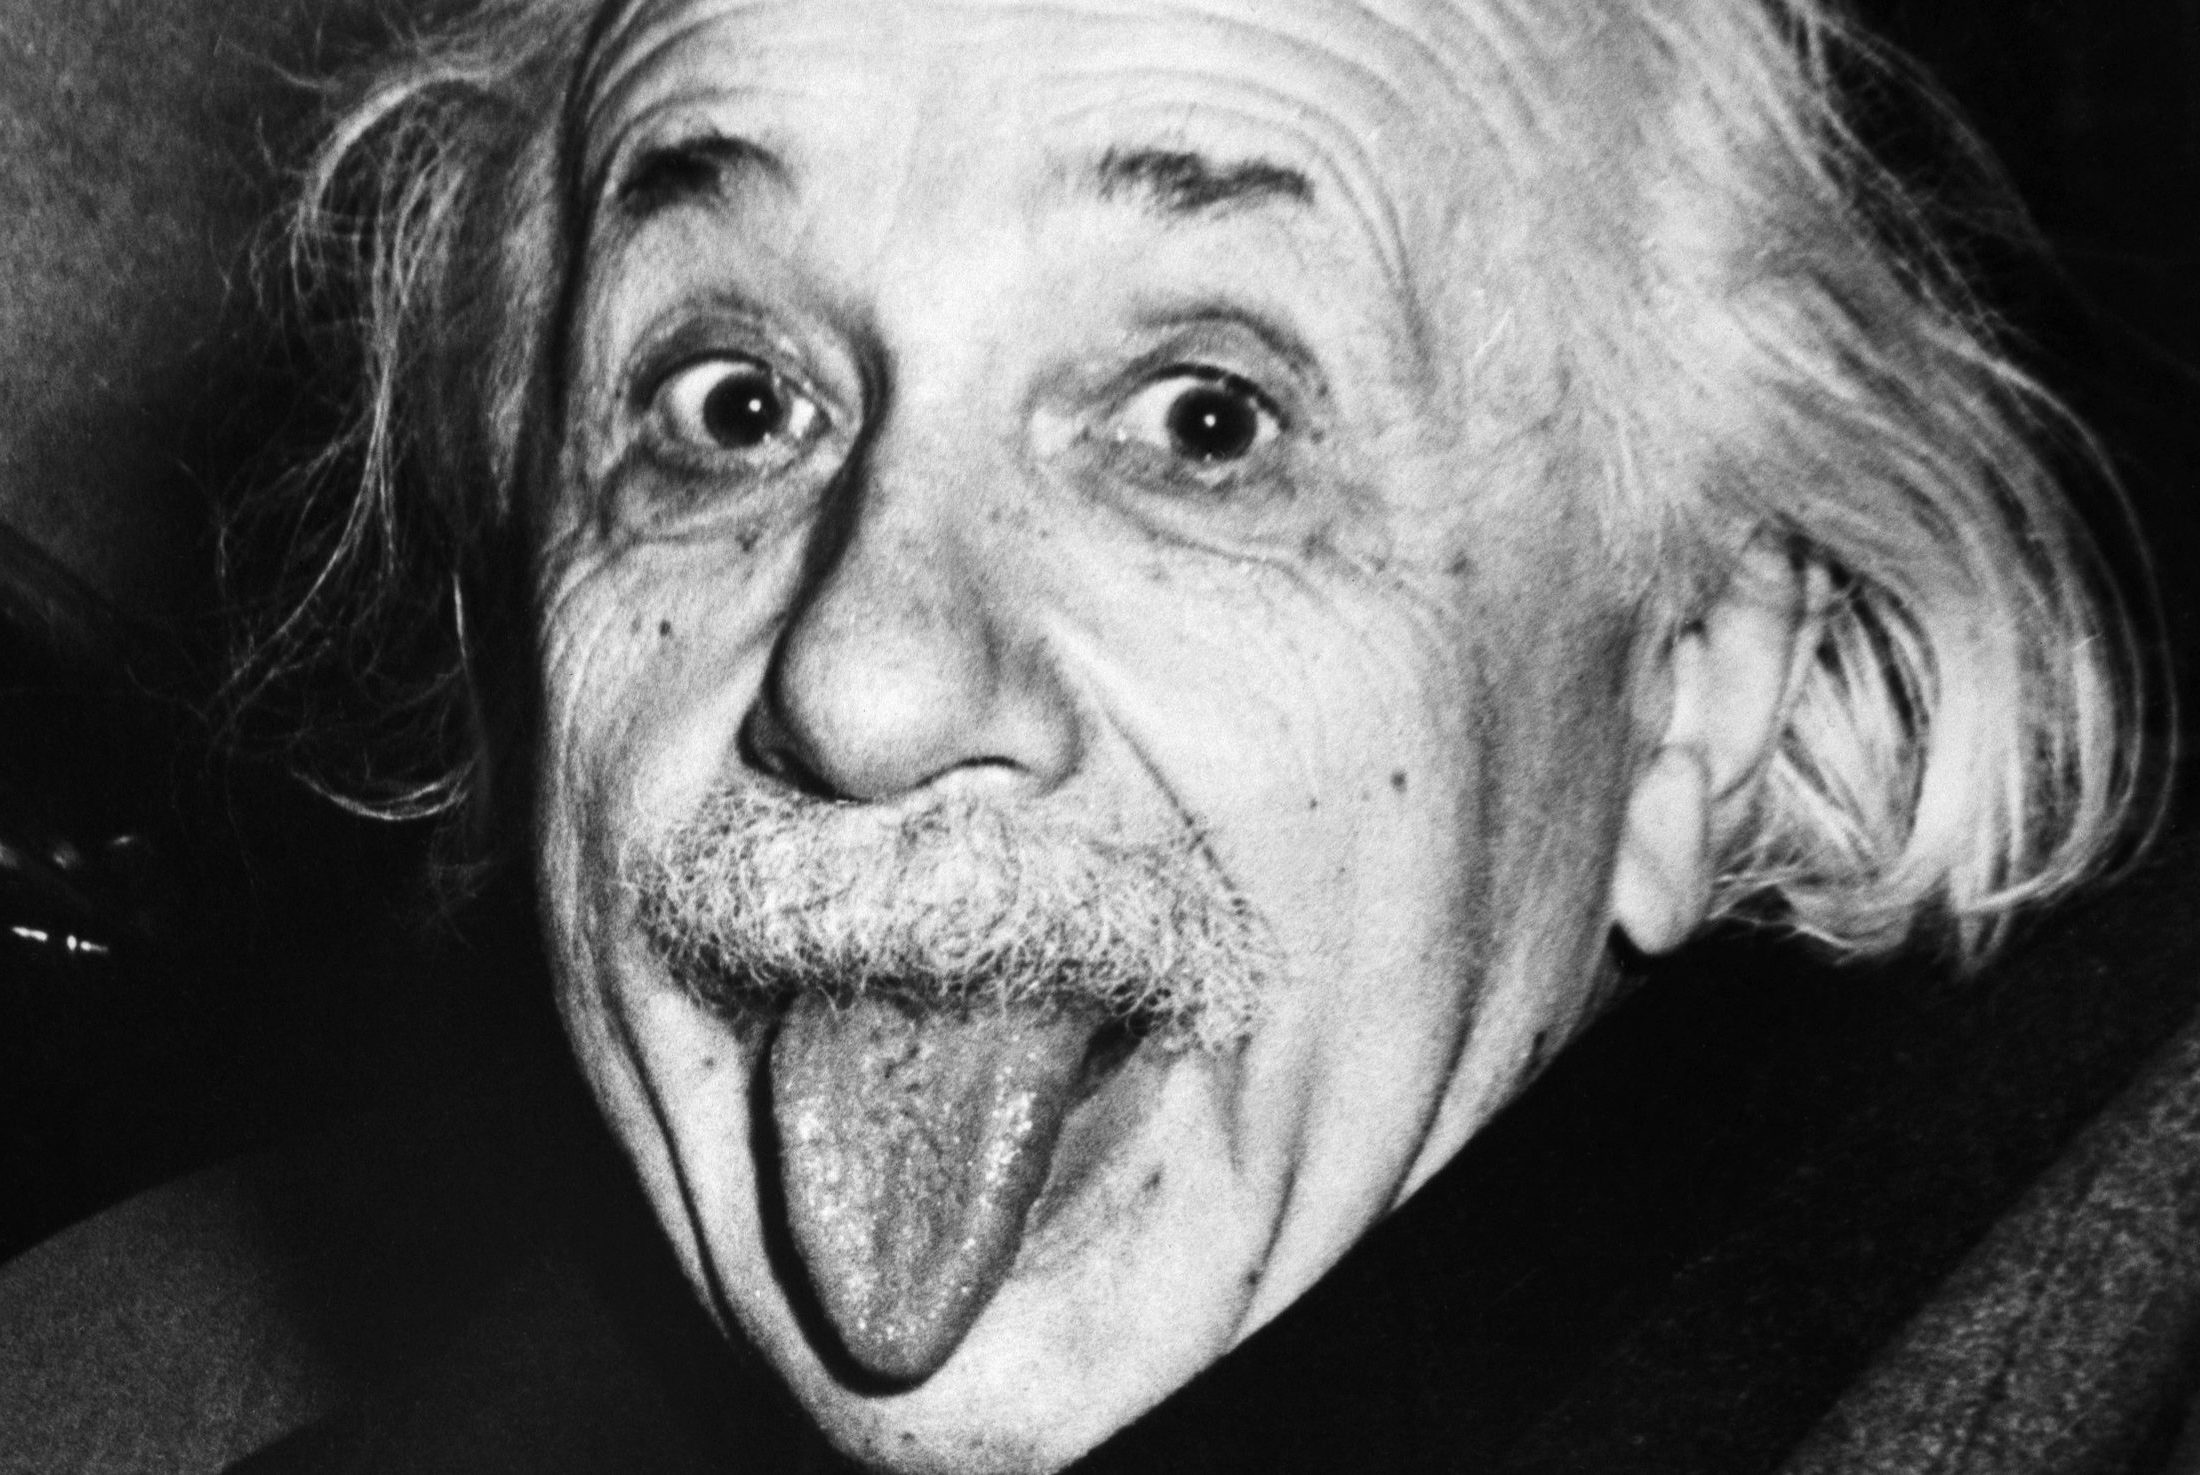 Einstein sacando la lengua: el origen de la famosa fotografía - La Tercera